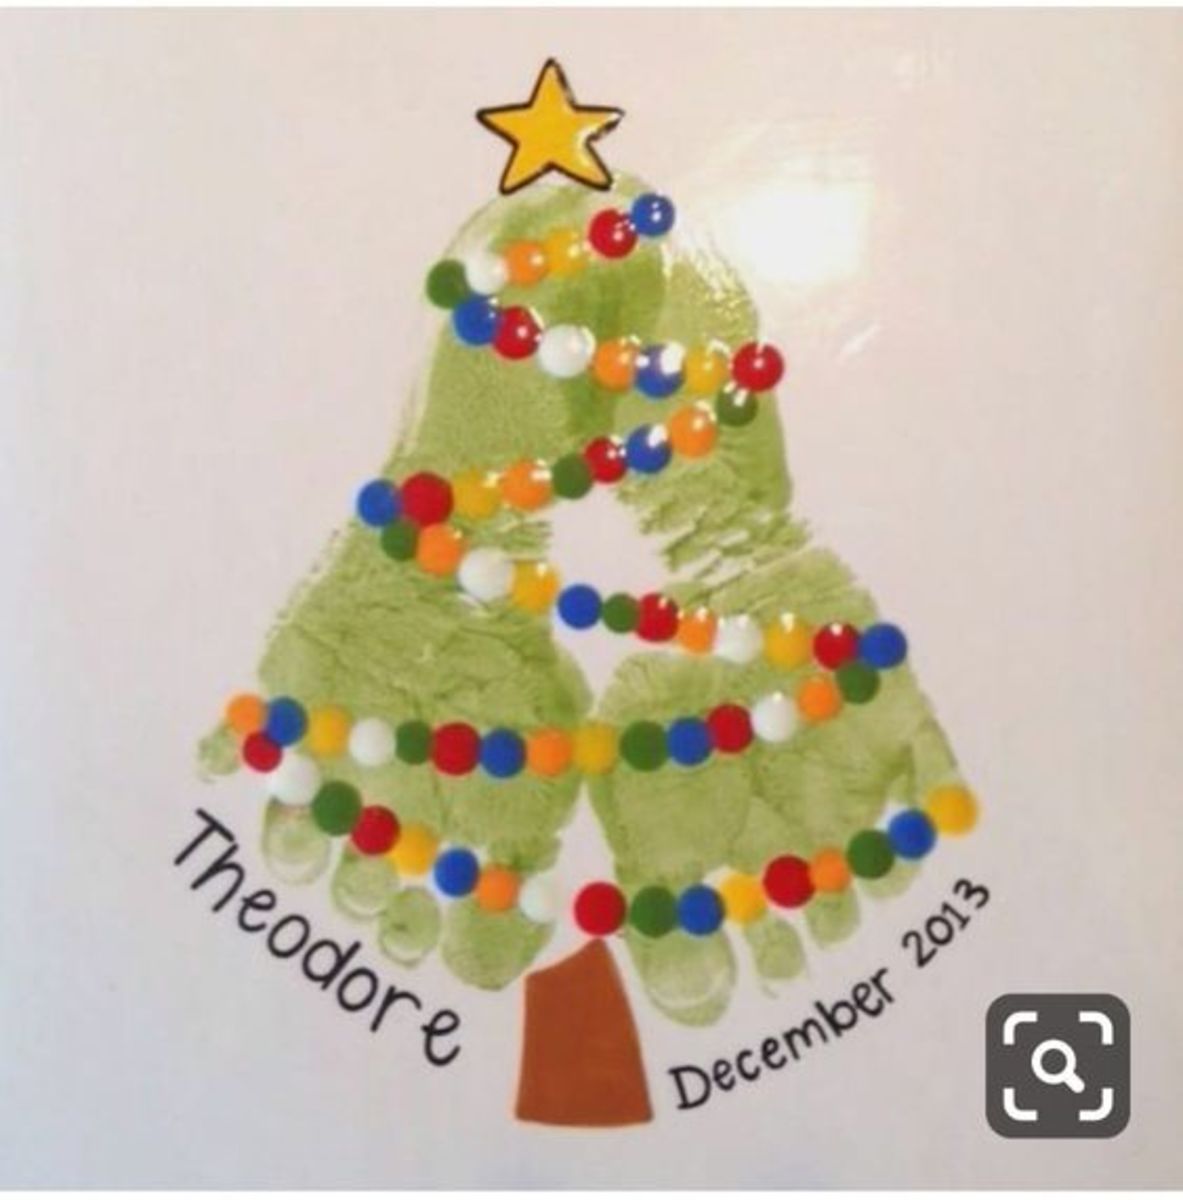 Decorated Christmas Tree Footprint Card